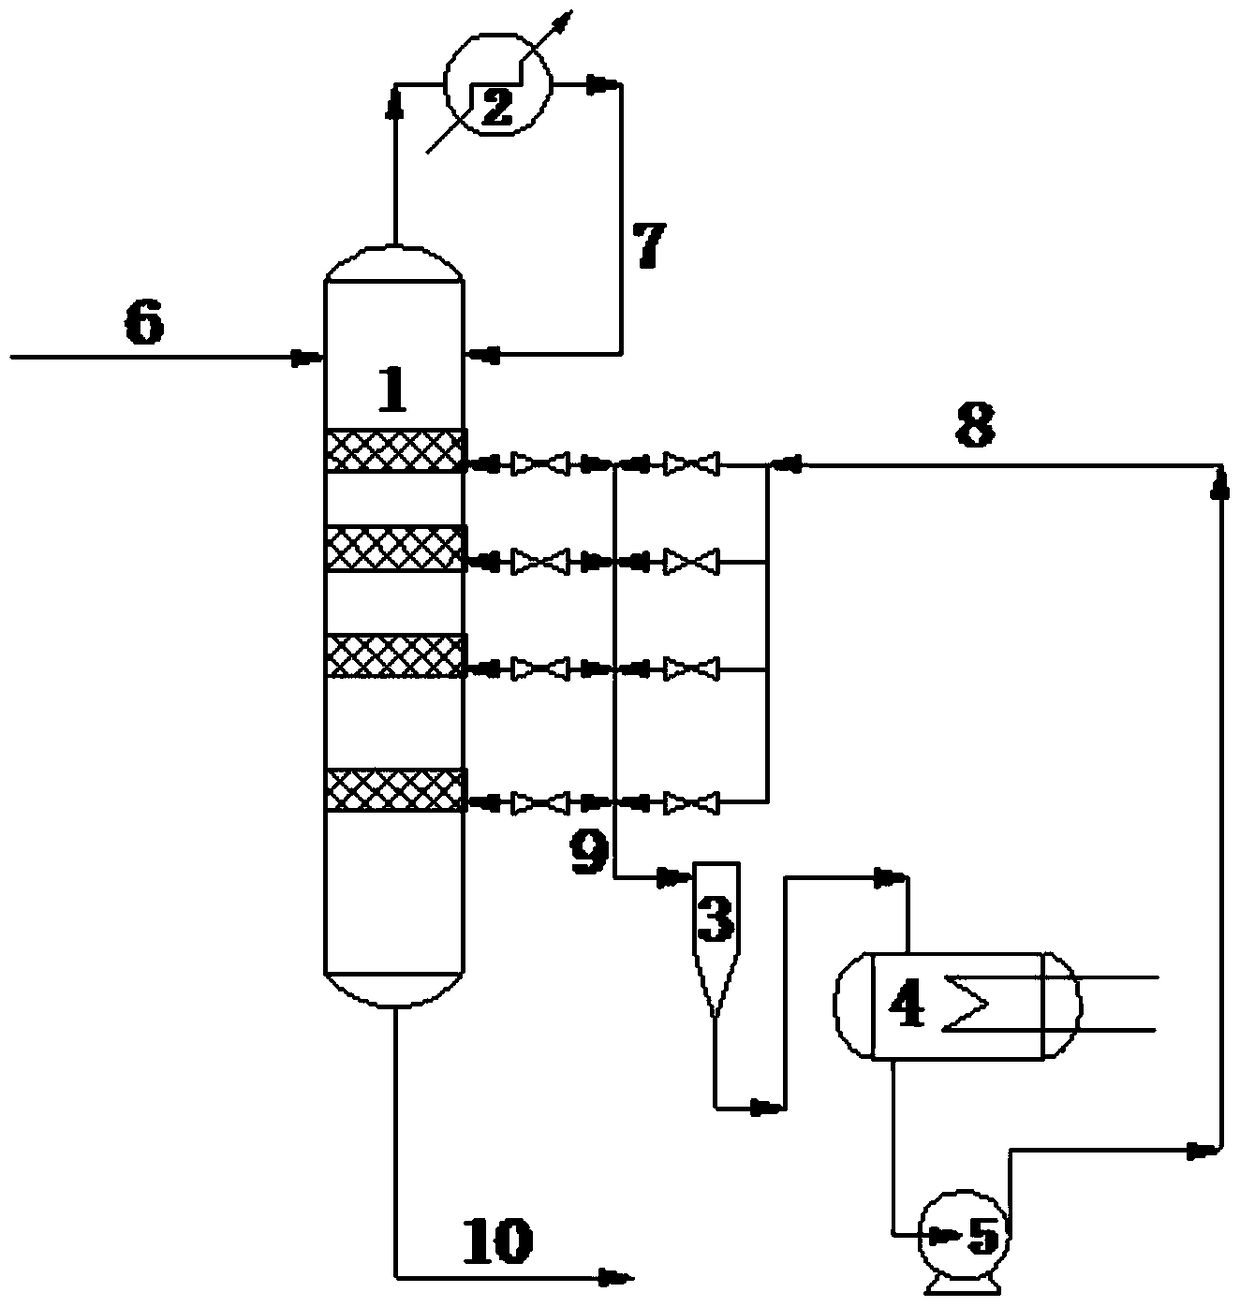 Method for preparing phenol acetone using moving bed reactor